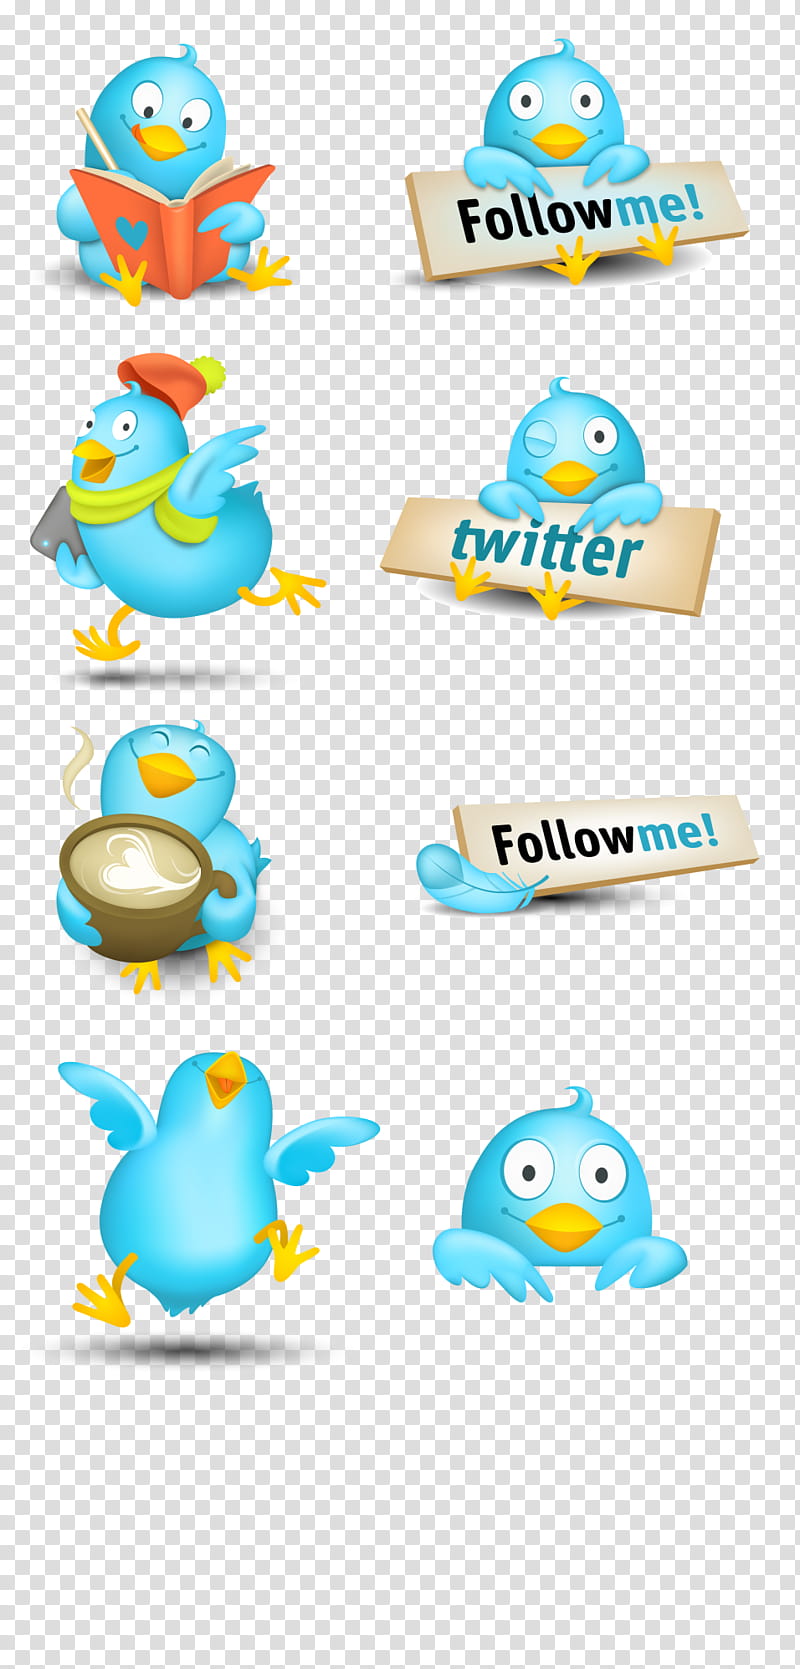 Twitter , follow me! twitter follow me! bird illustration transparent background PNG clipart